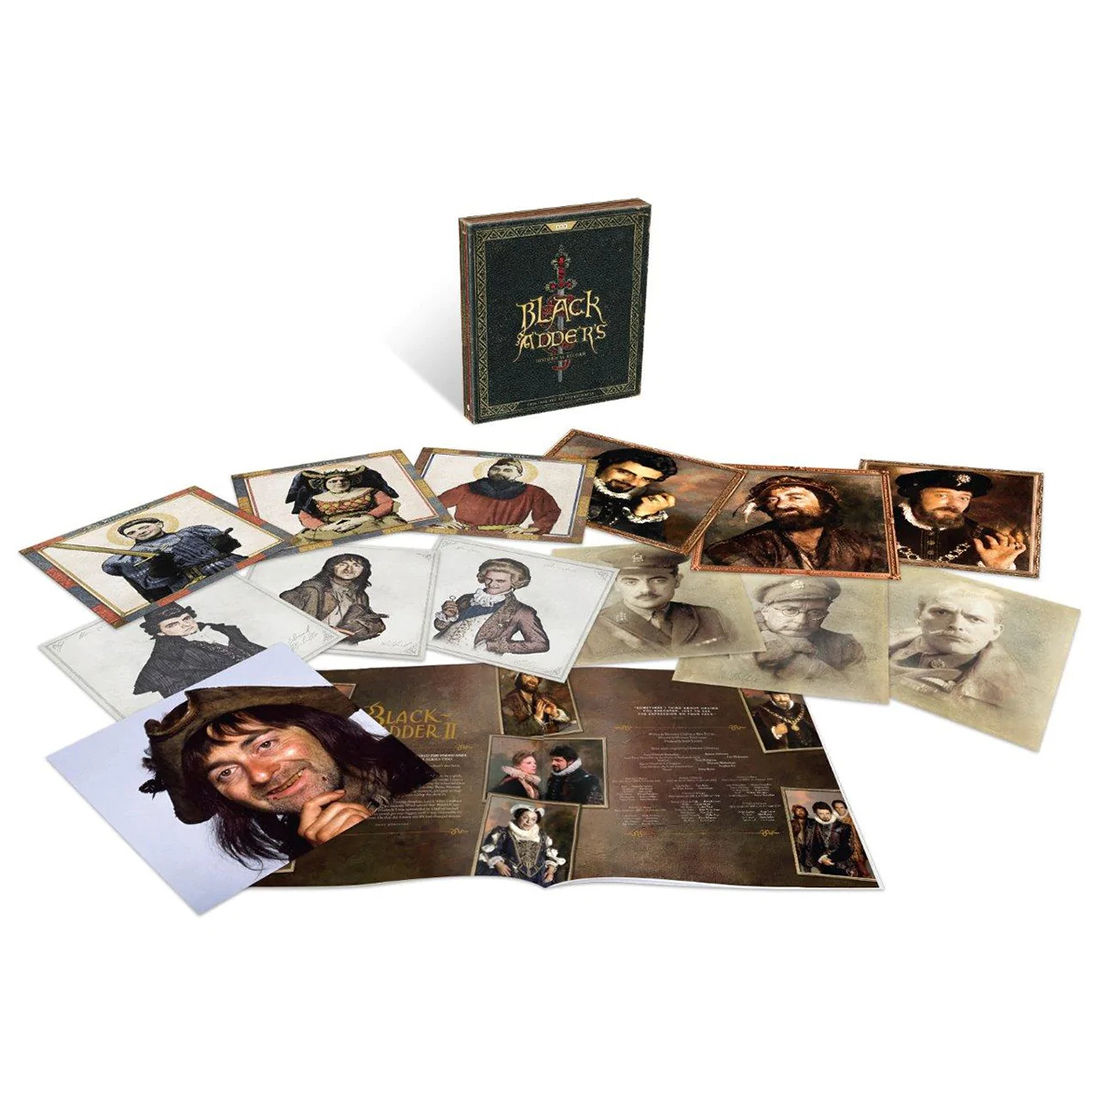 Original Soundtrack - Blackadder's Historical Record - 40th Anniversary: Signed 140g Gold Vinyl 12LP Box Set [Signed By Tony Robinson aka Baldrick]